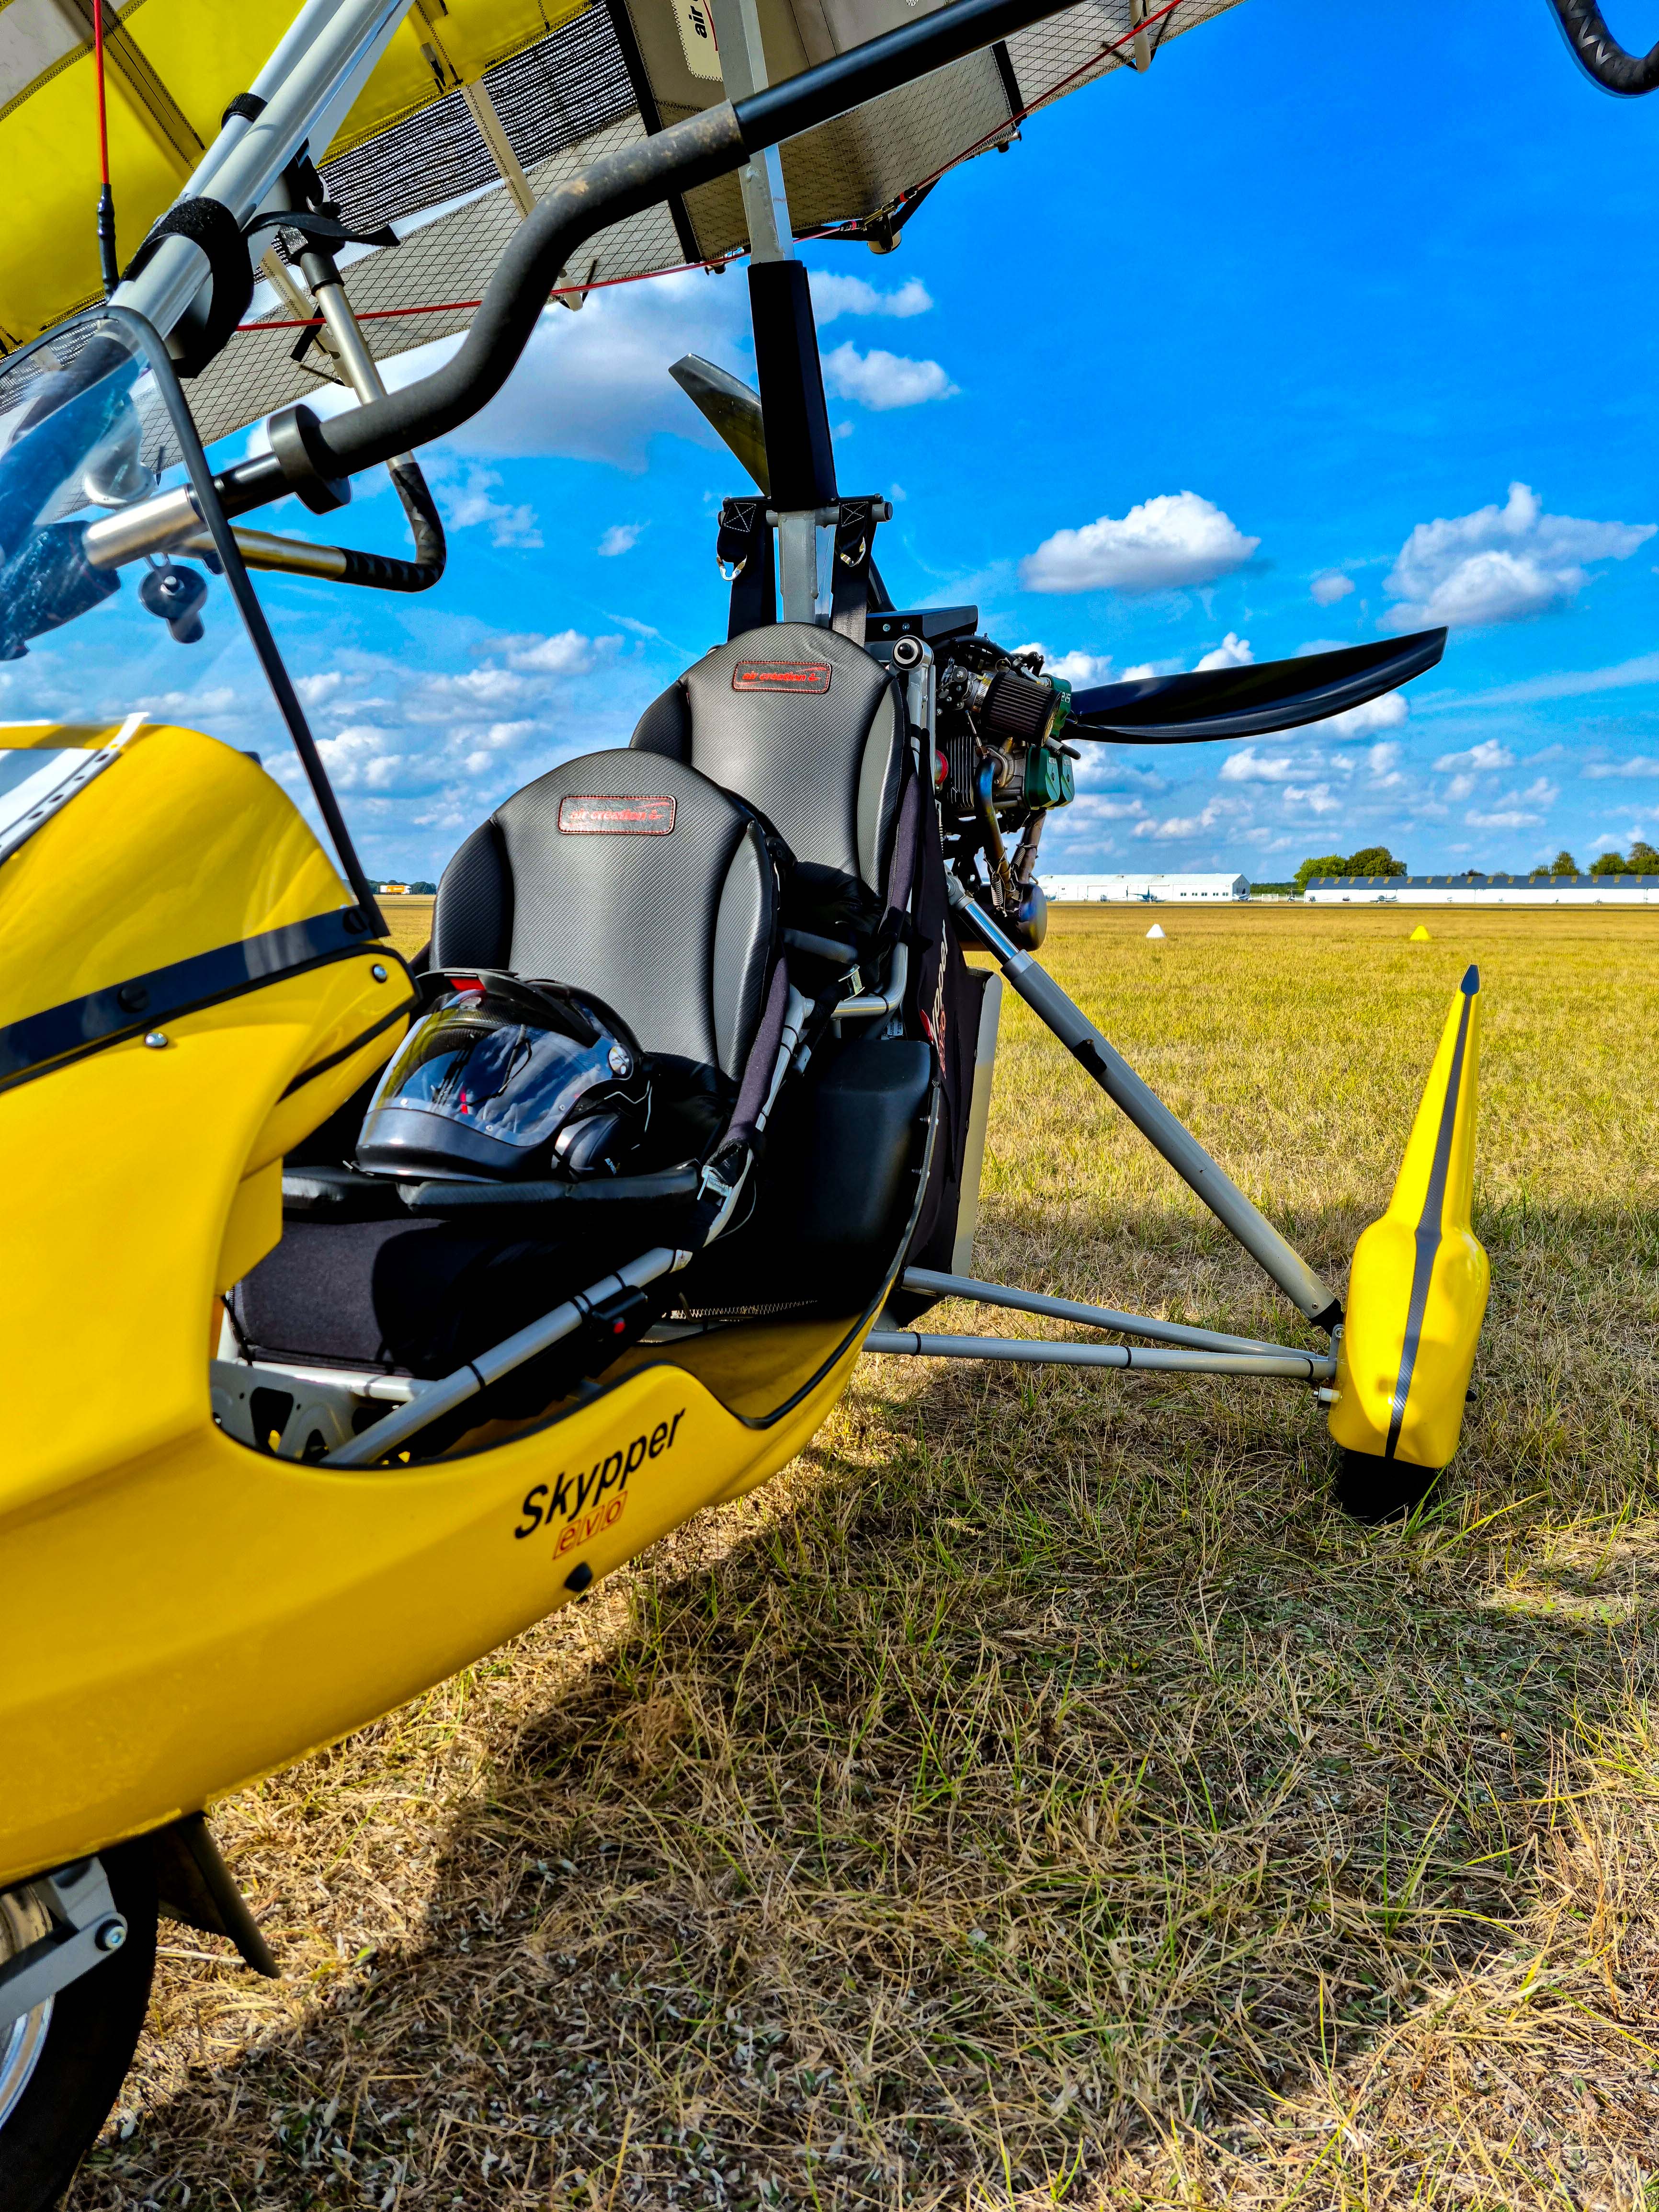 fly/lifestyle-binox2-skypper-evo-lifestyle-ulm-pendulaire-ultralight-trike-wings-4.jpg